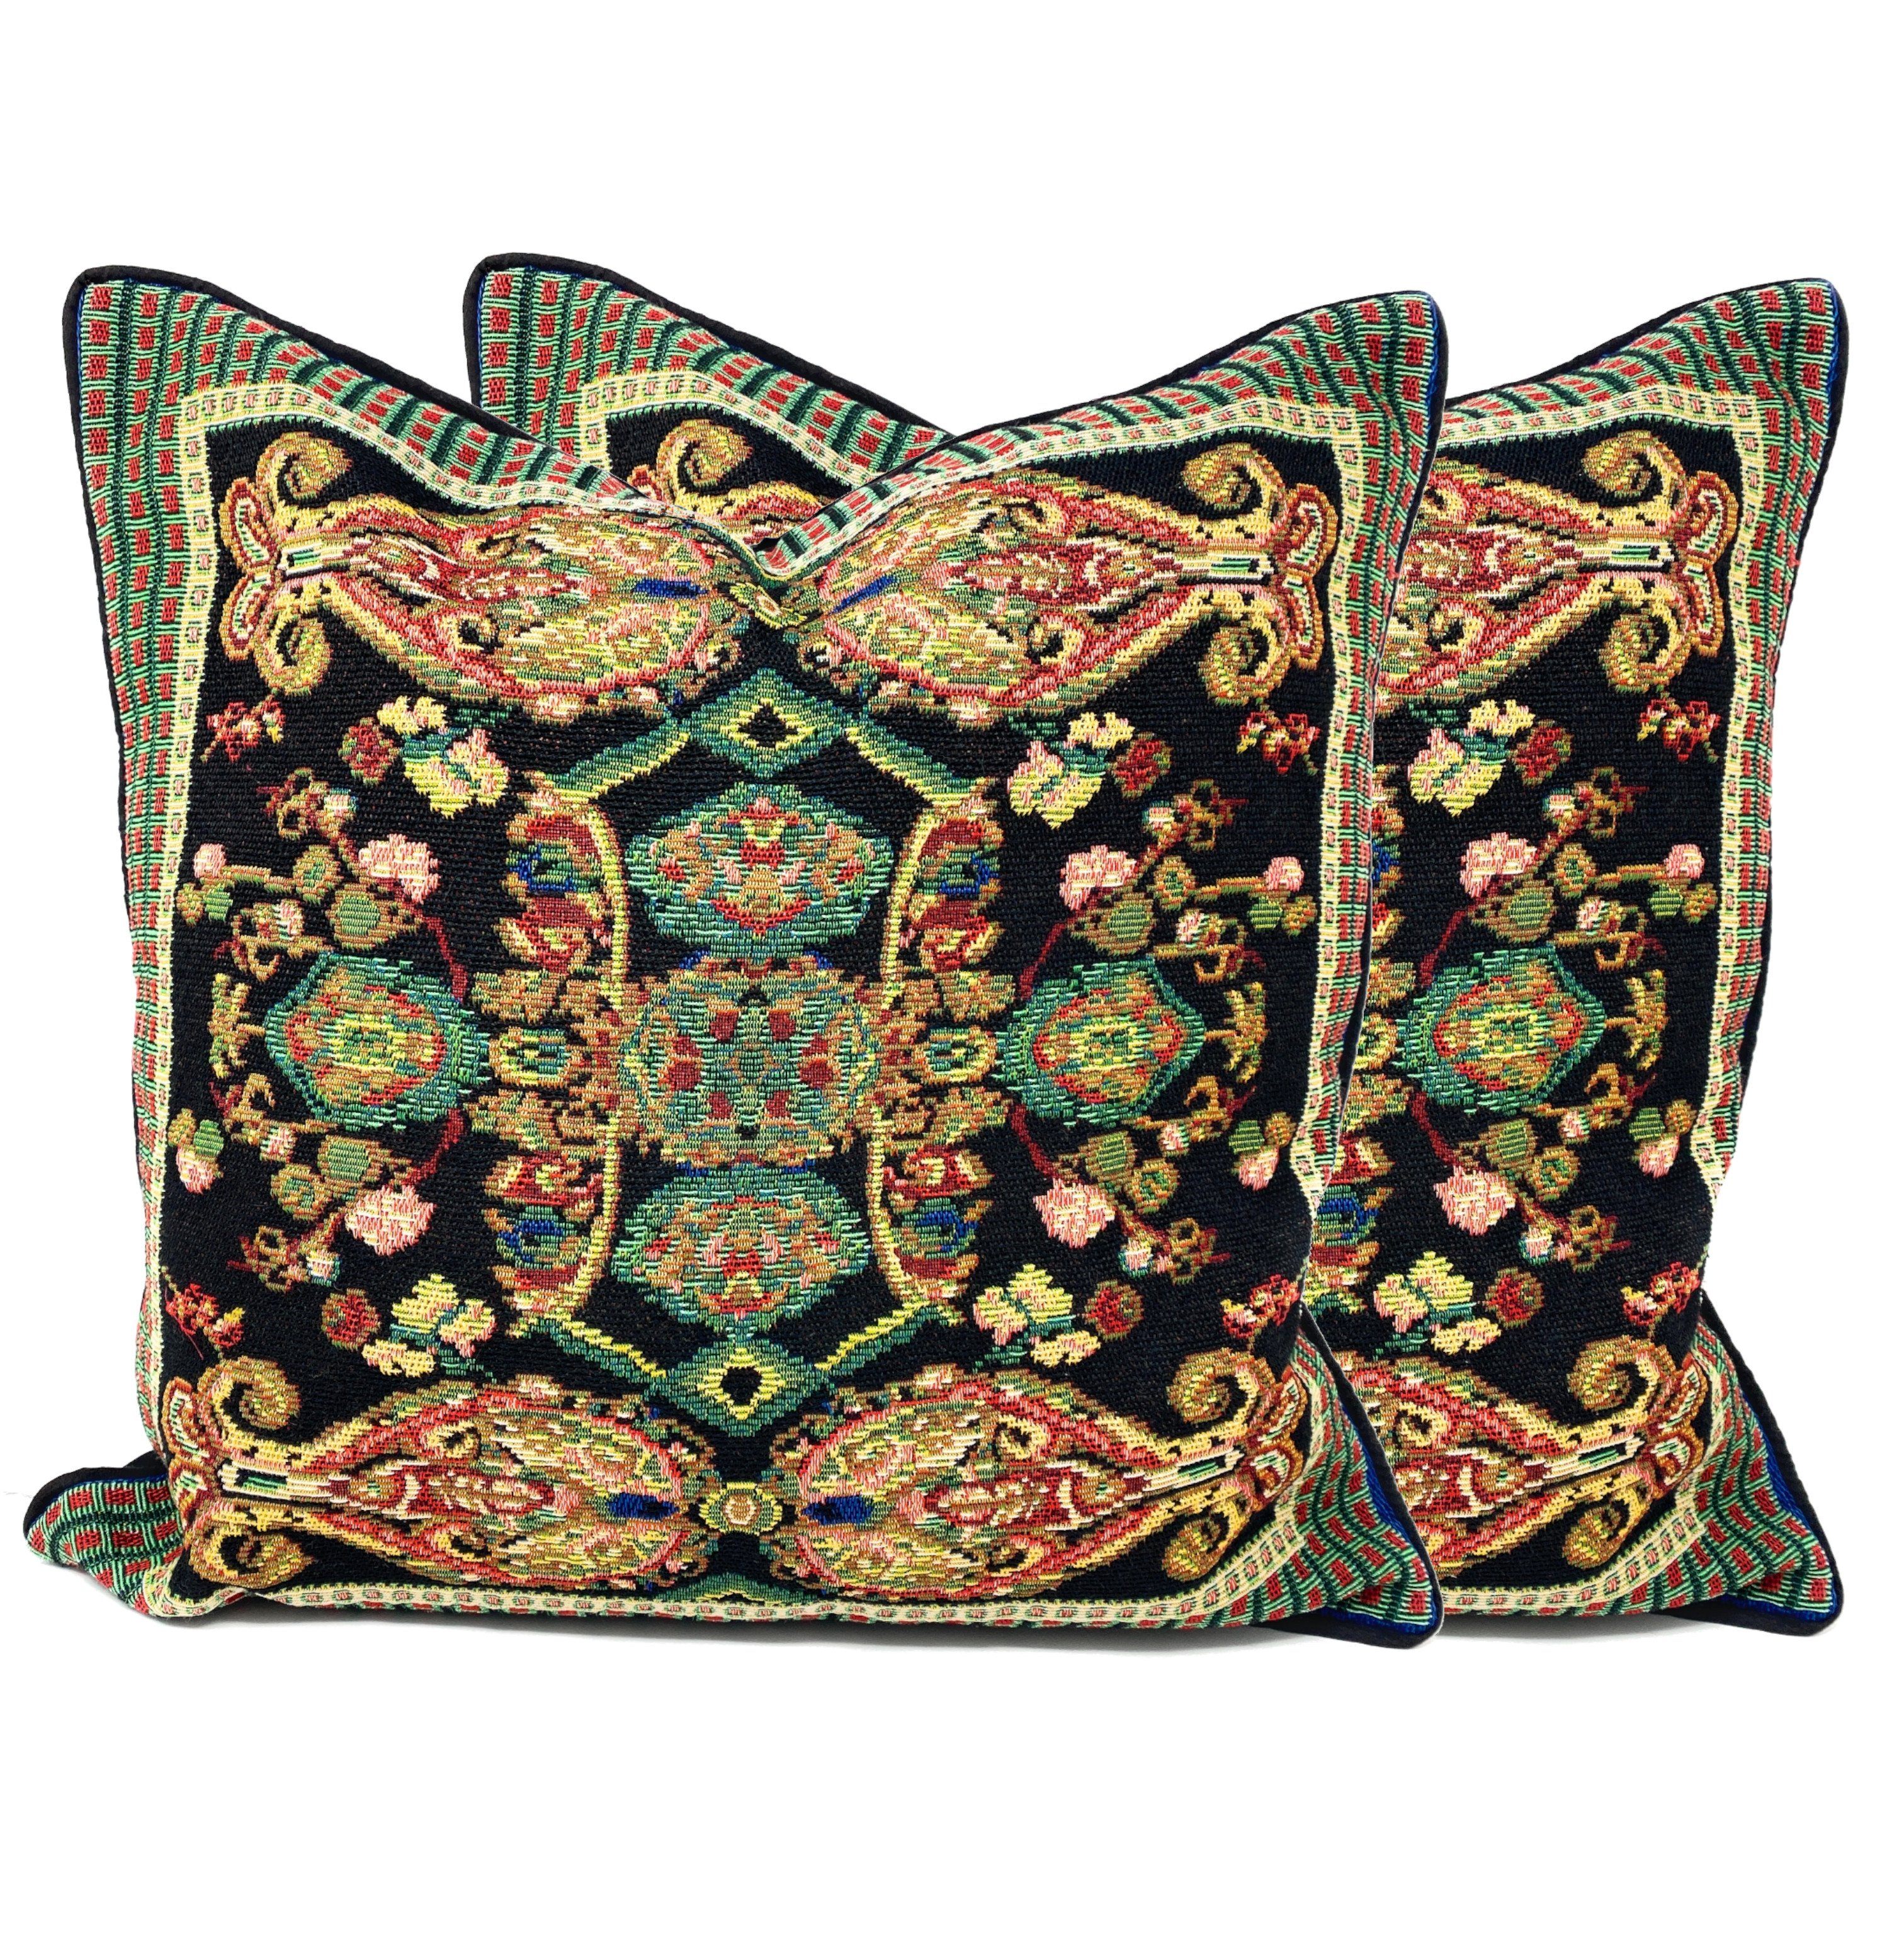 Tache Elegant Black Ornate Paisley Woven Tapestry Throw Pillow Cover (18192) - Tache Home Fashion